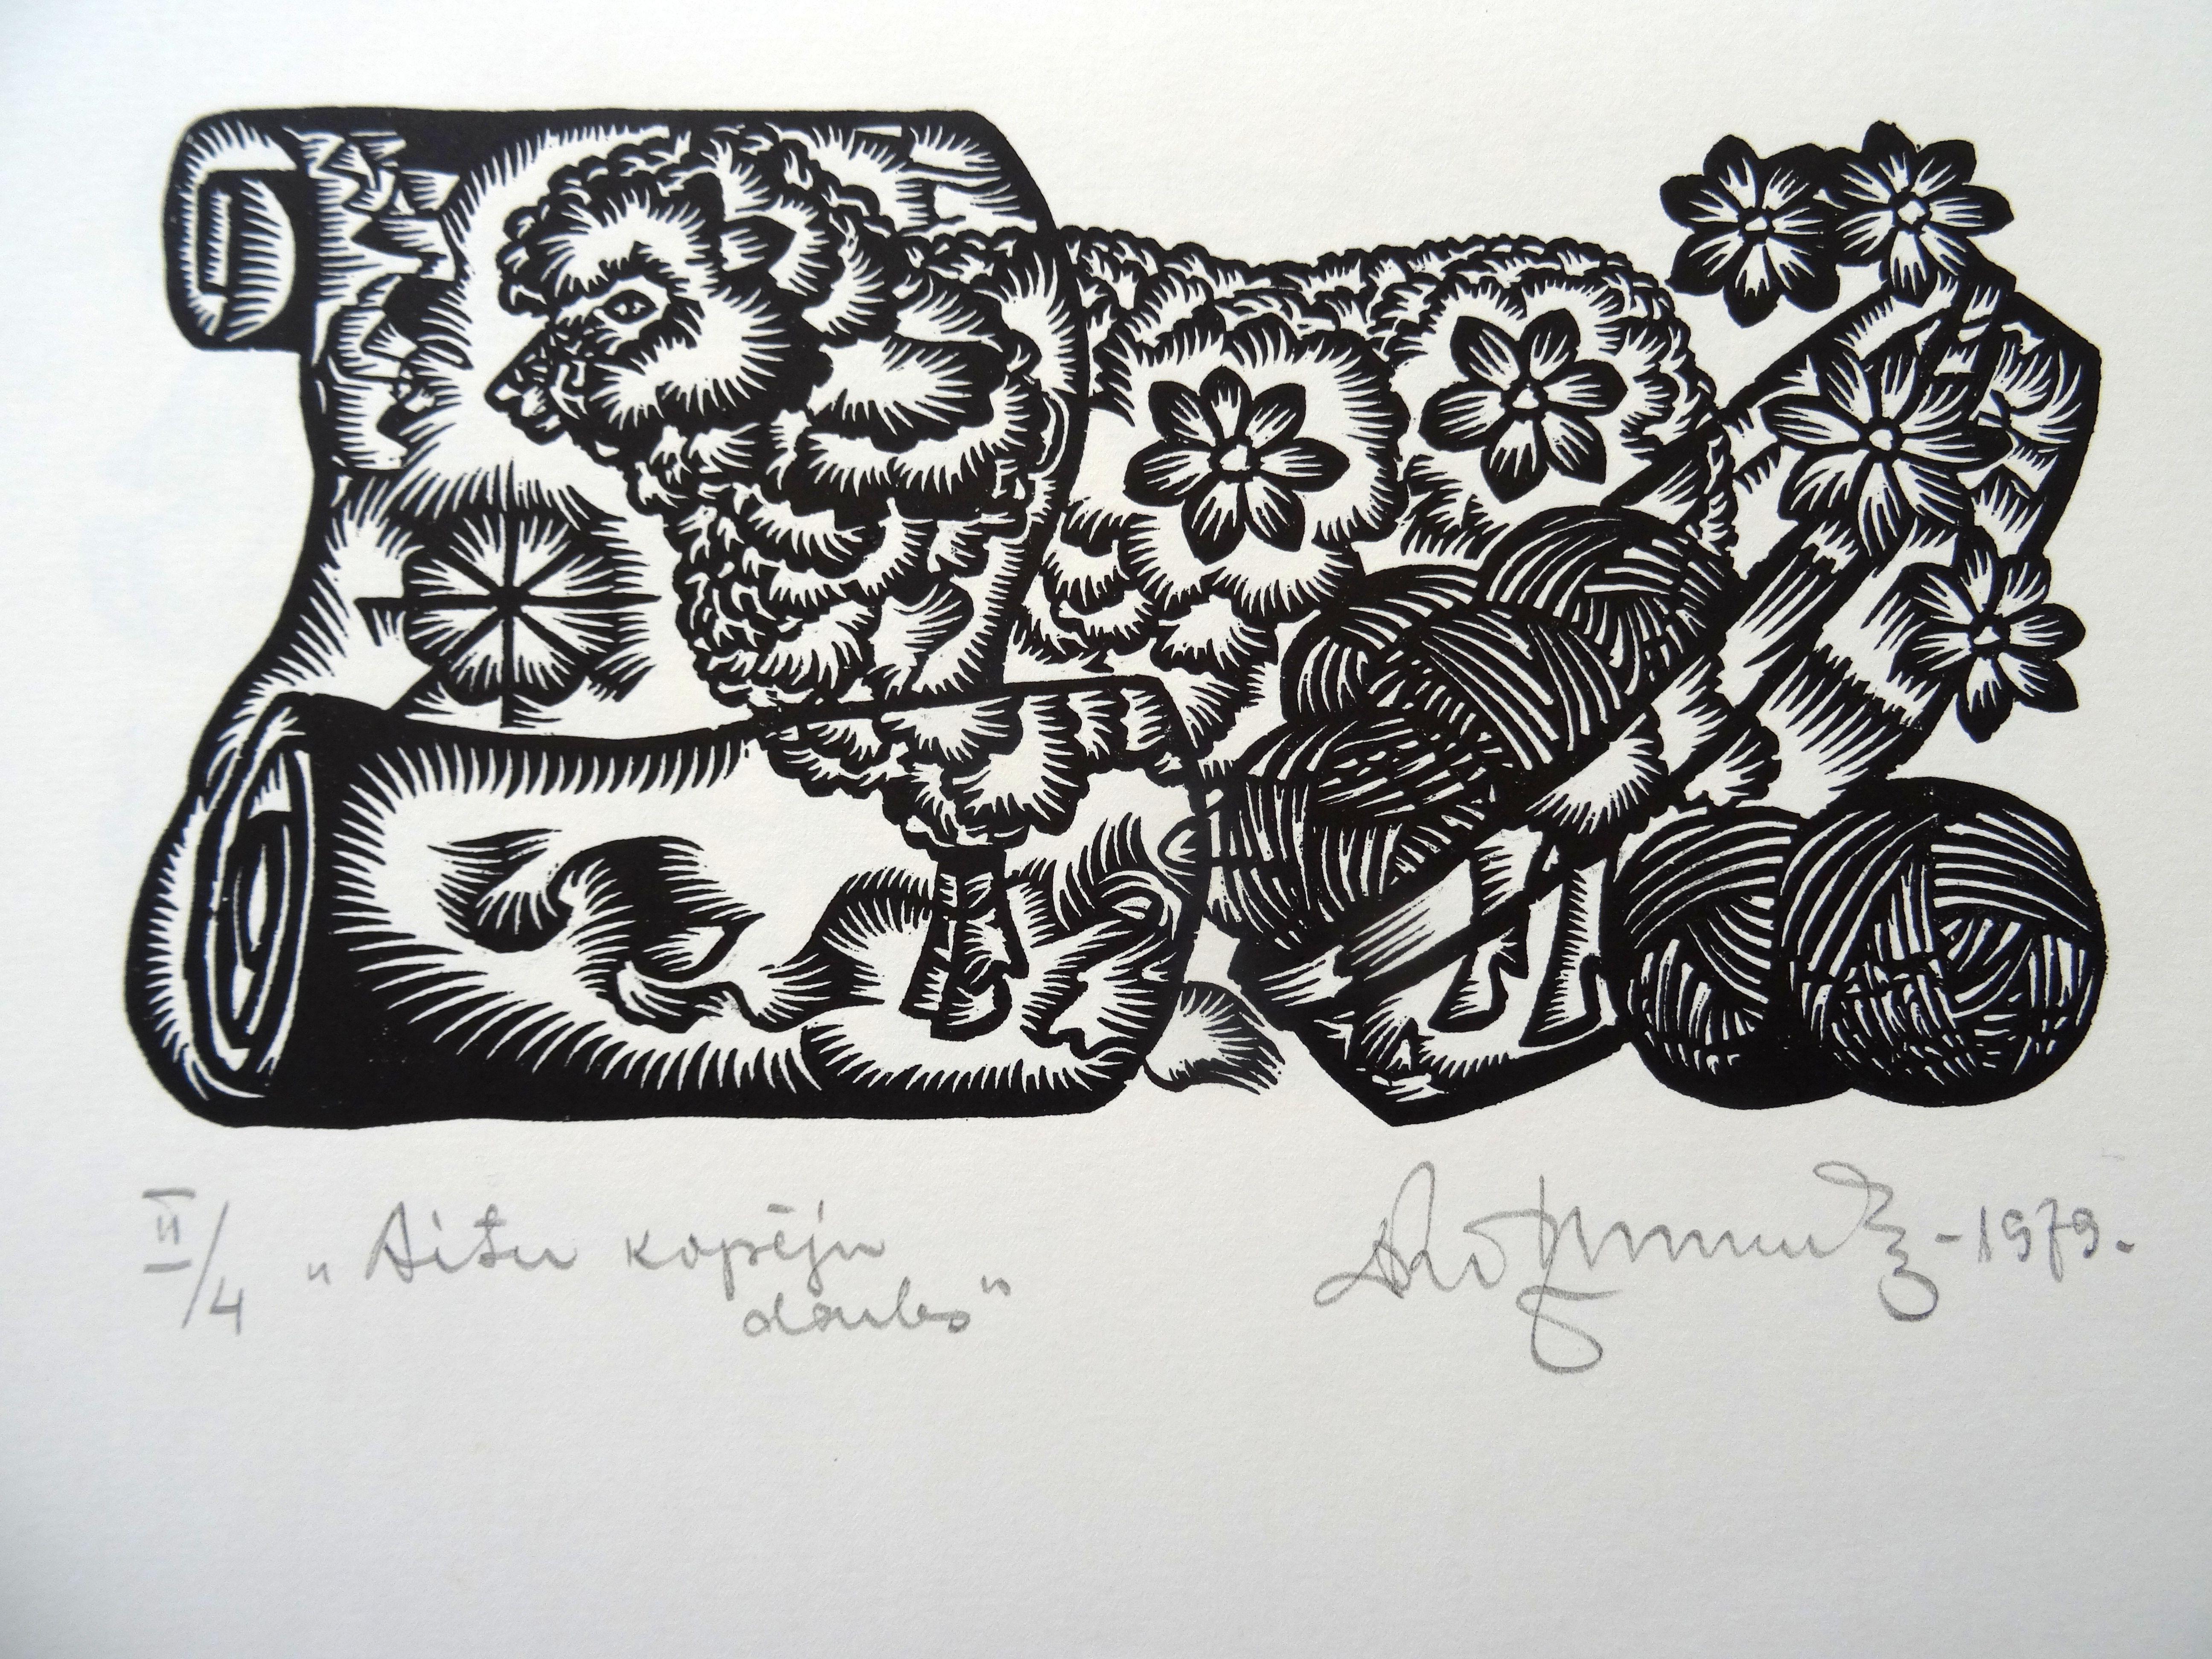 Dainis Rozkalns Print – Hirtenarbeit. 1979. Papier, Linolschnitt, 25x34 cm